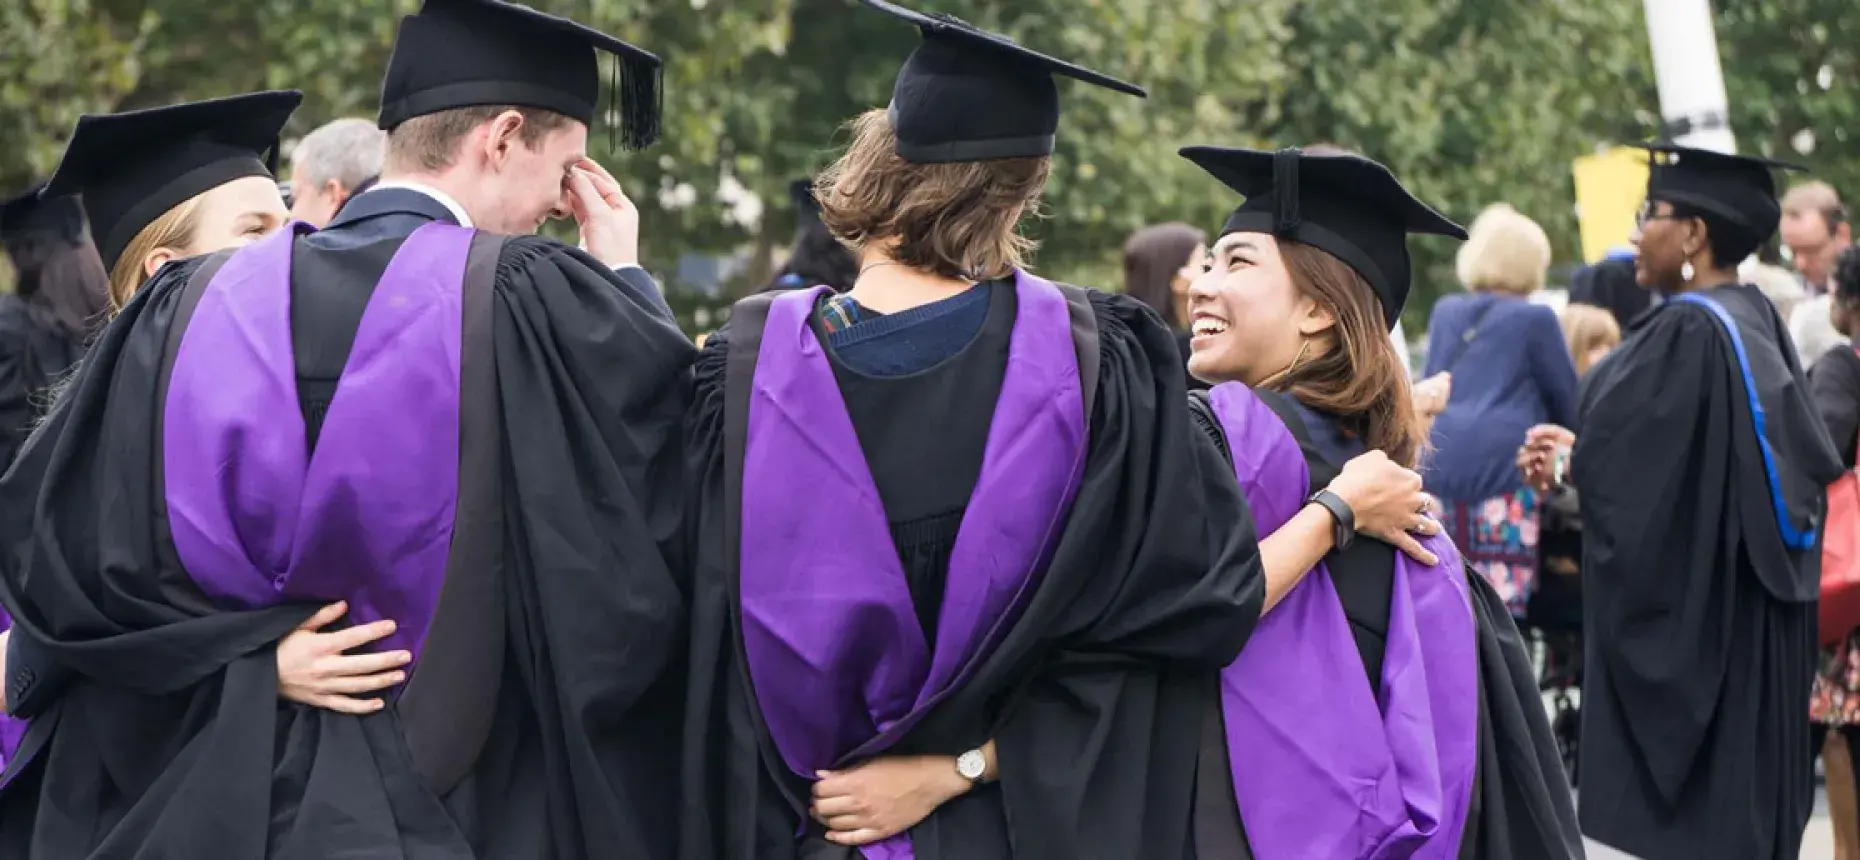 group of graduates with purple sashes huddled together